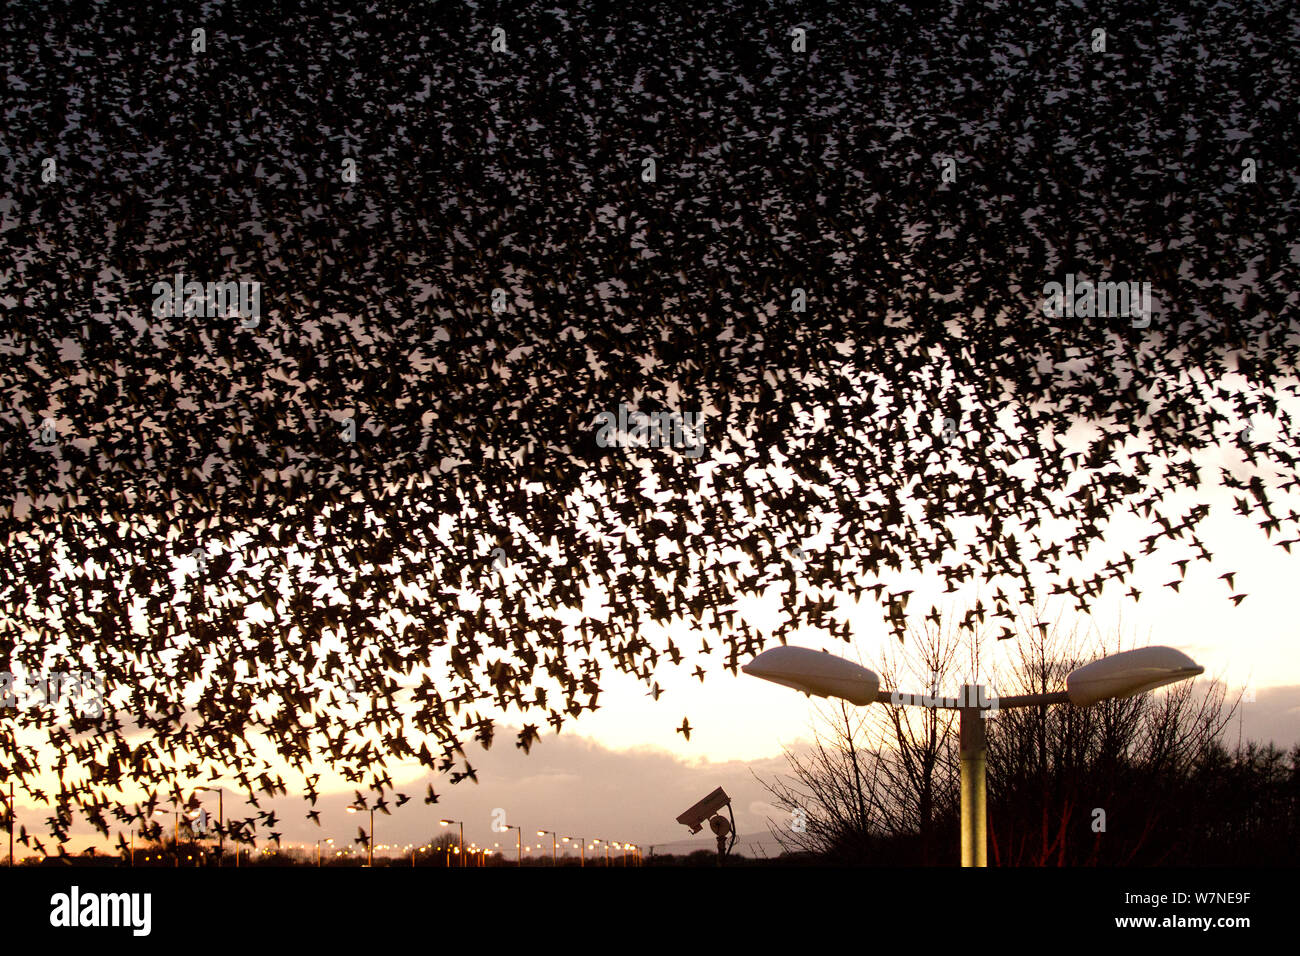 Starlings (Sturnus vulgaris) flocking above urban streetlights at dusk. Dumfries and Galloway, Scotland, UK, March. 'Urban Wildlife' category, British Wildlife Photography Awards (BWPA) competition 2012. Stock Photo